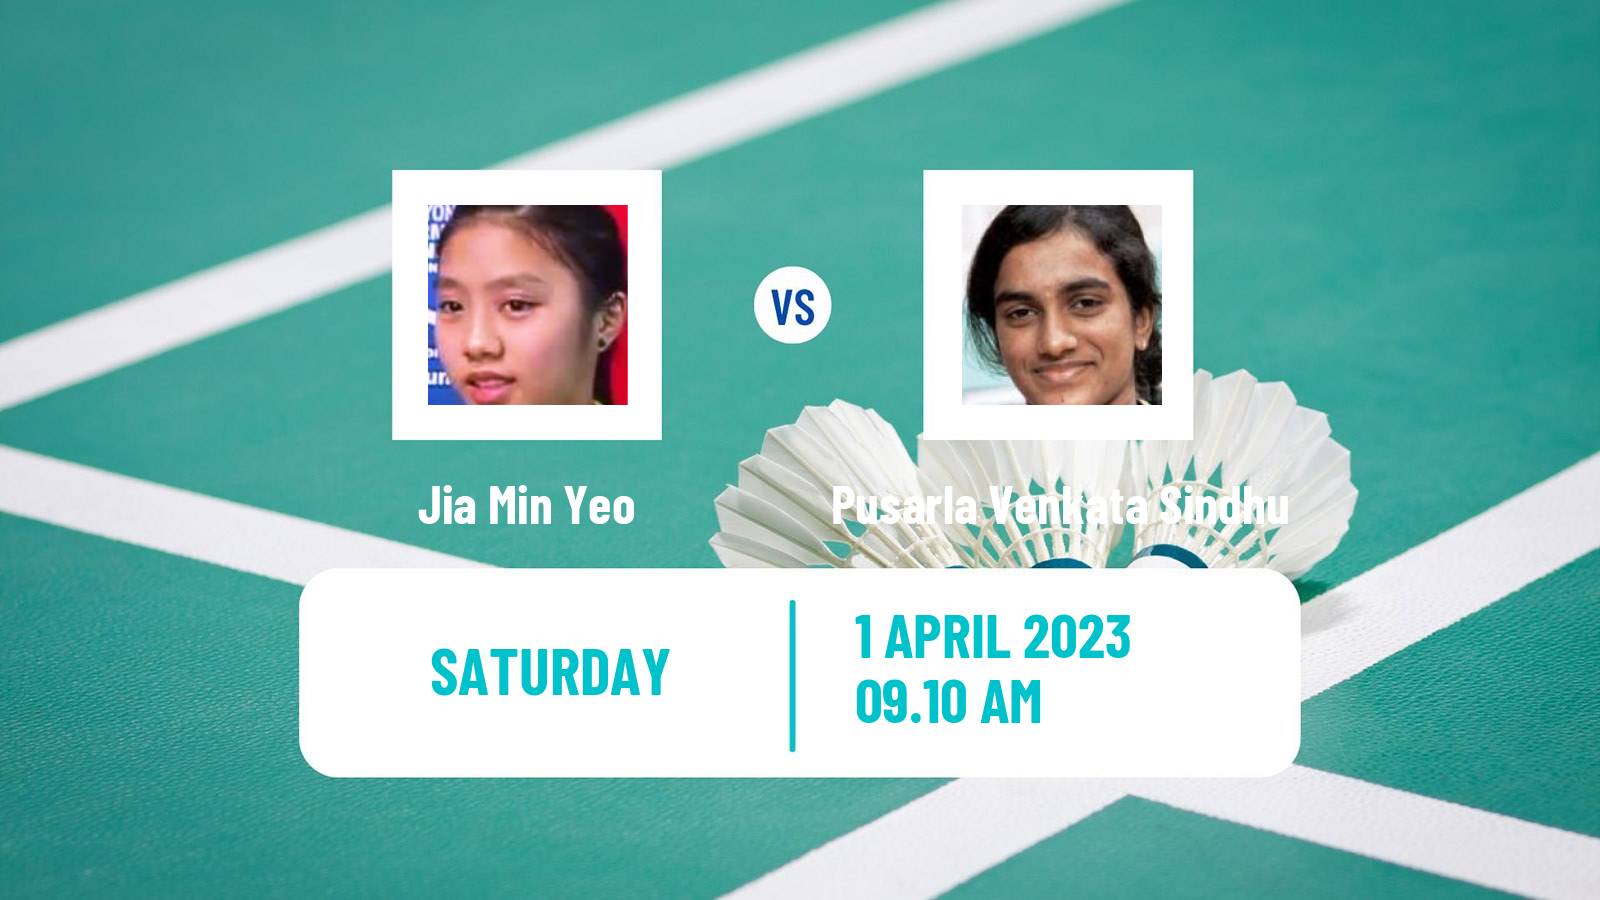 Badminton Badminton Jia Min Yeo - Pusarla Venkata Sindhu